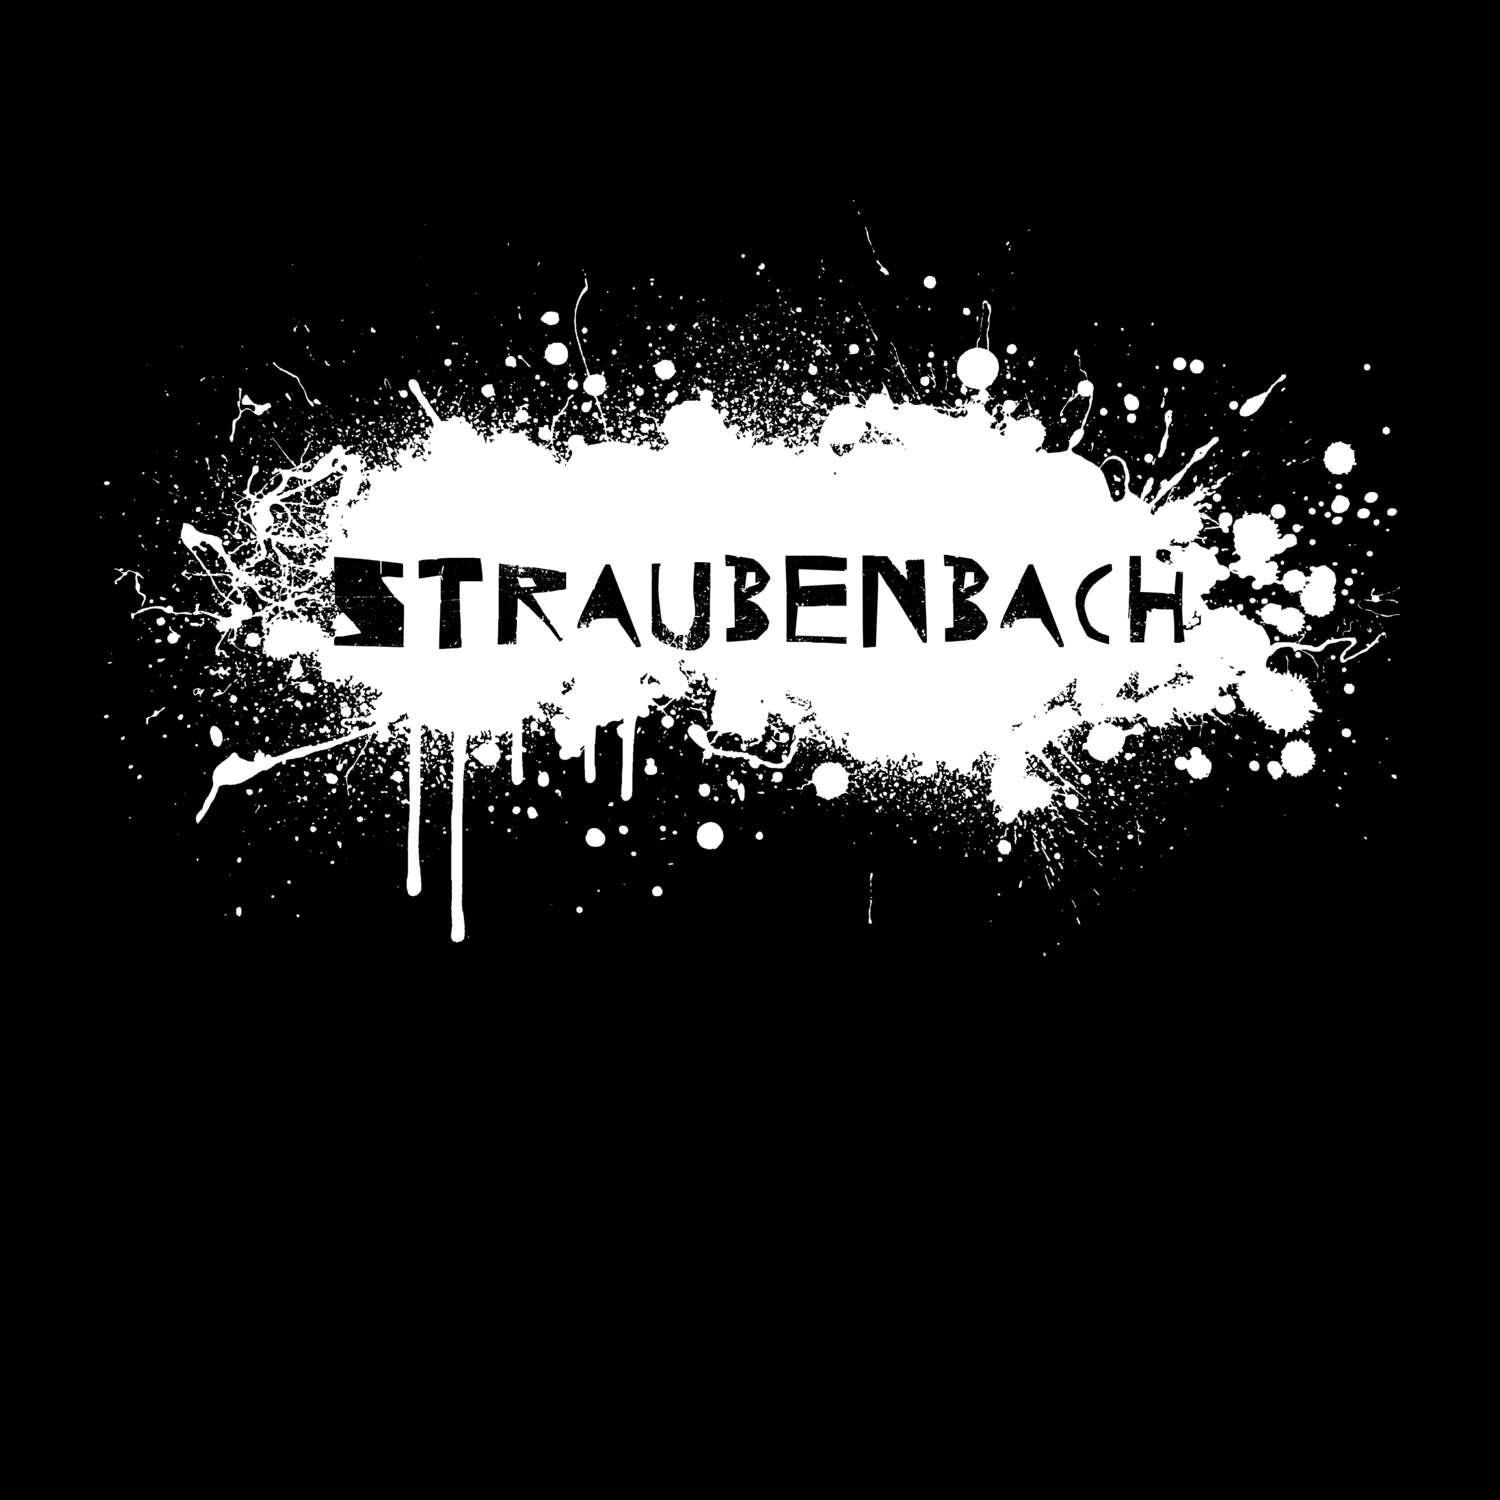 Straubenbach T-Shirt »Paint Splash Punk«